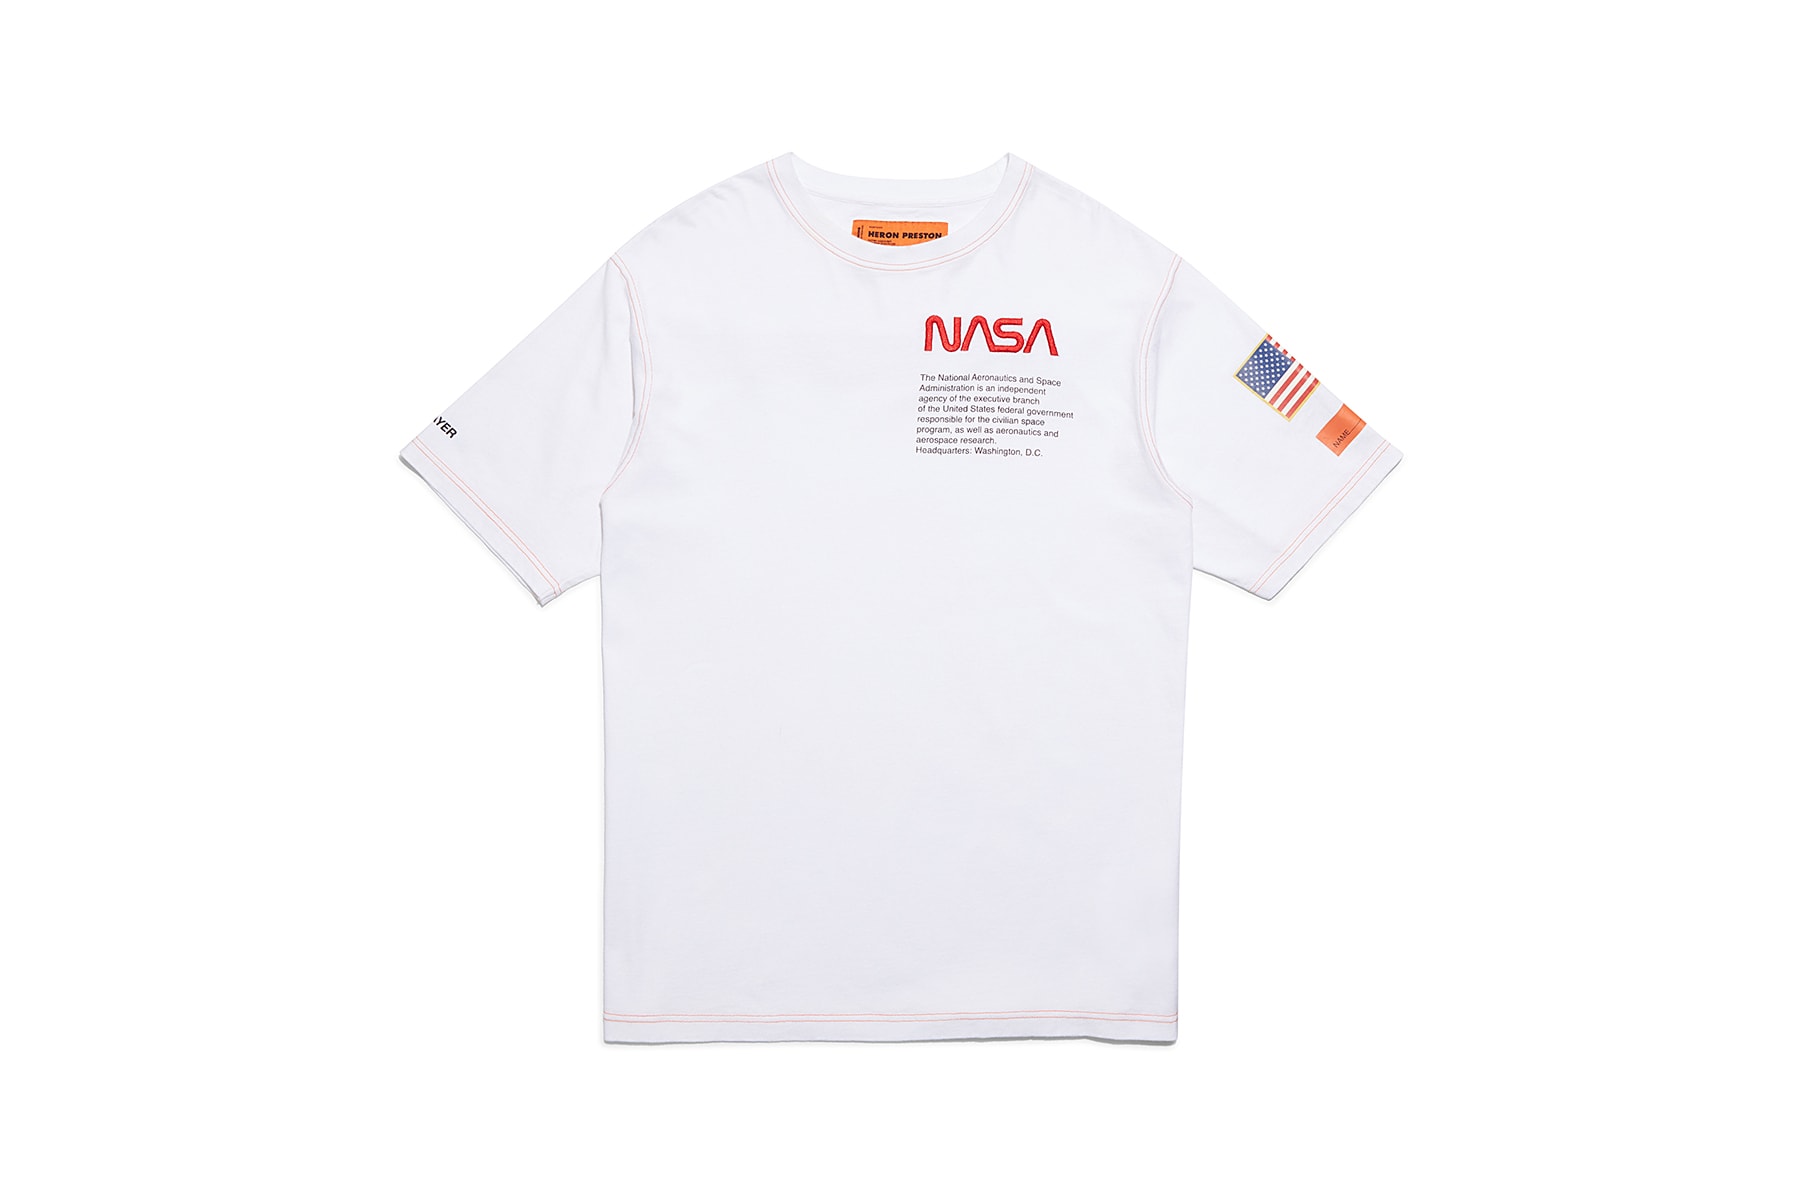 heron preston public figure fall winter 2018 collaboration nasa white tee shirt american flag logo